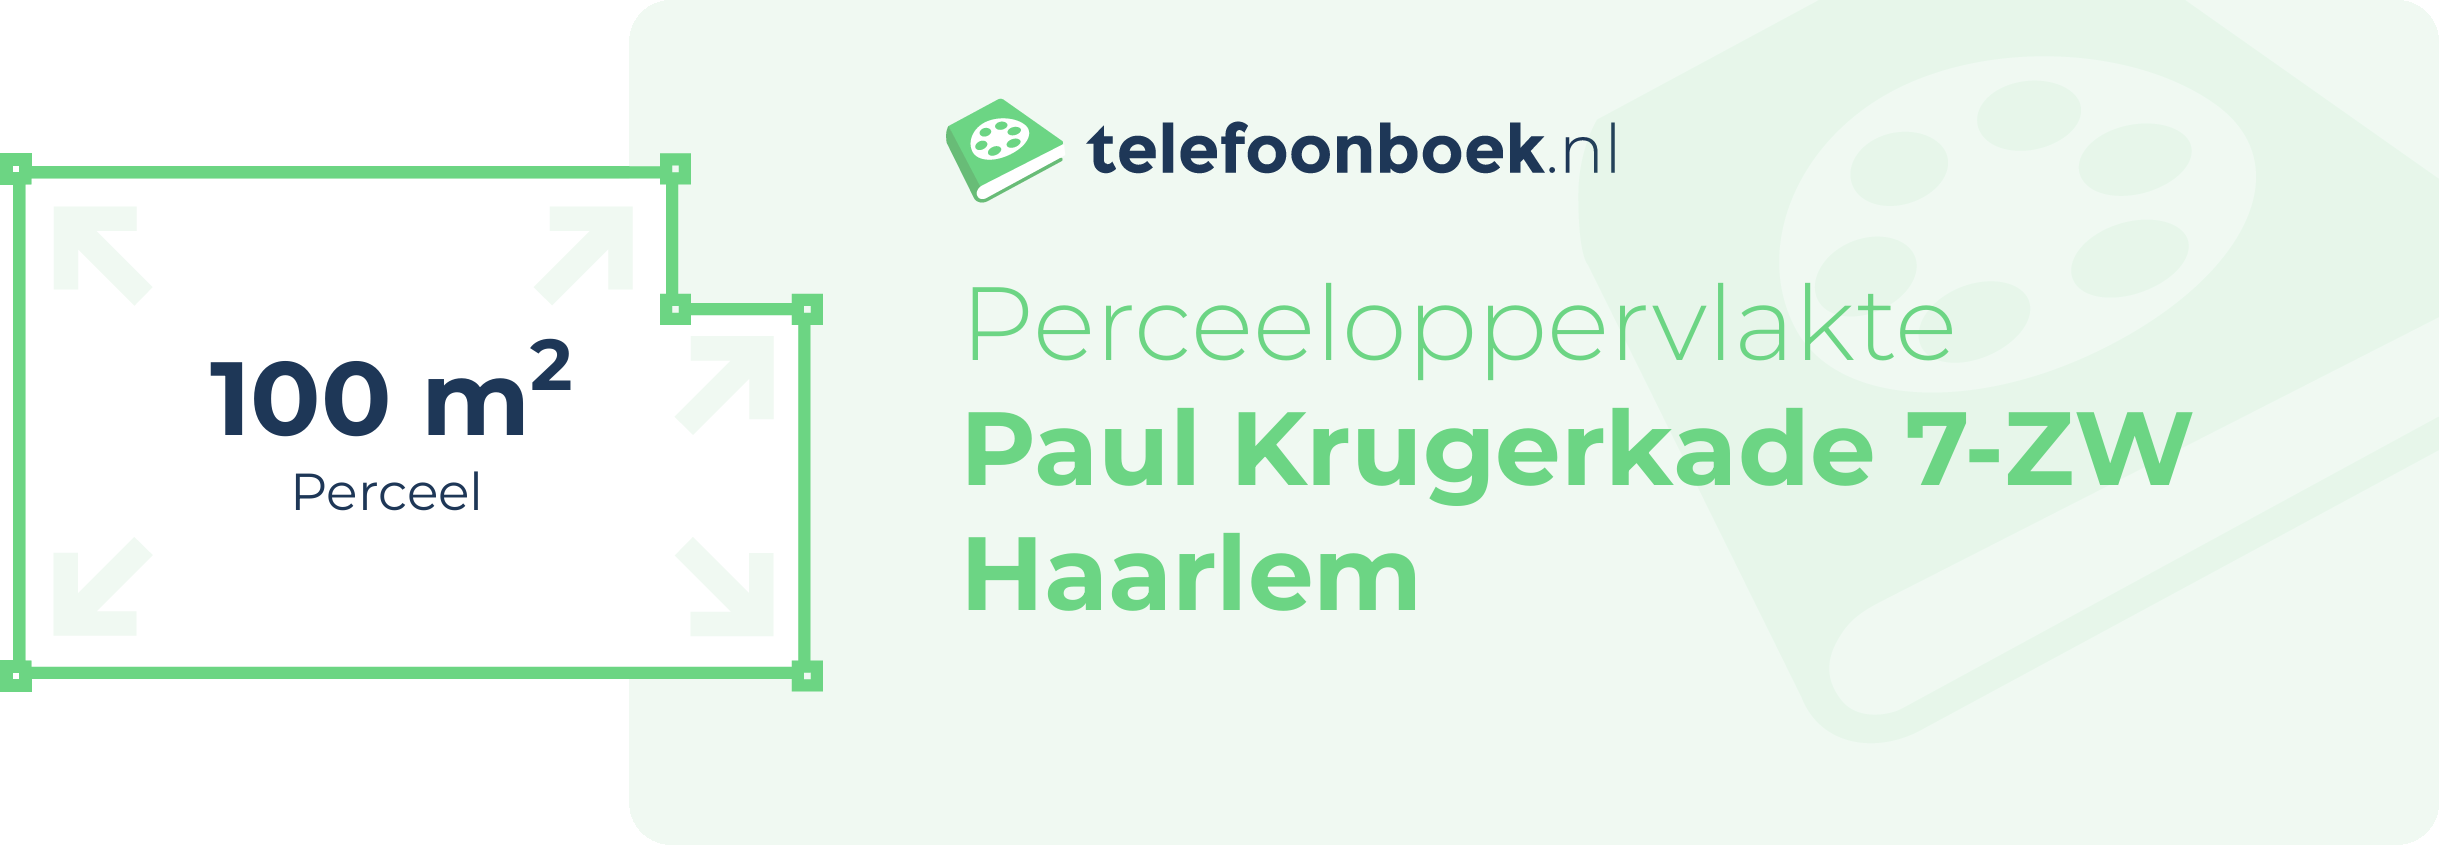 Perceeloppervlakte Paul Krugerkade 7-ZW Haarlem